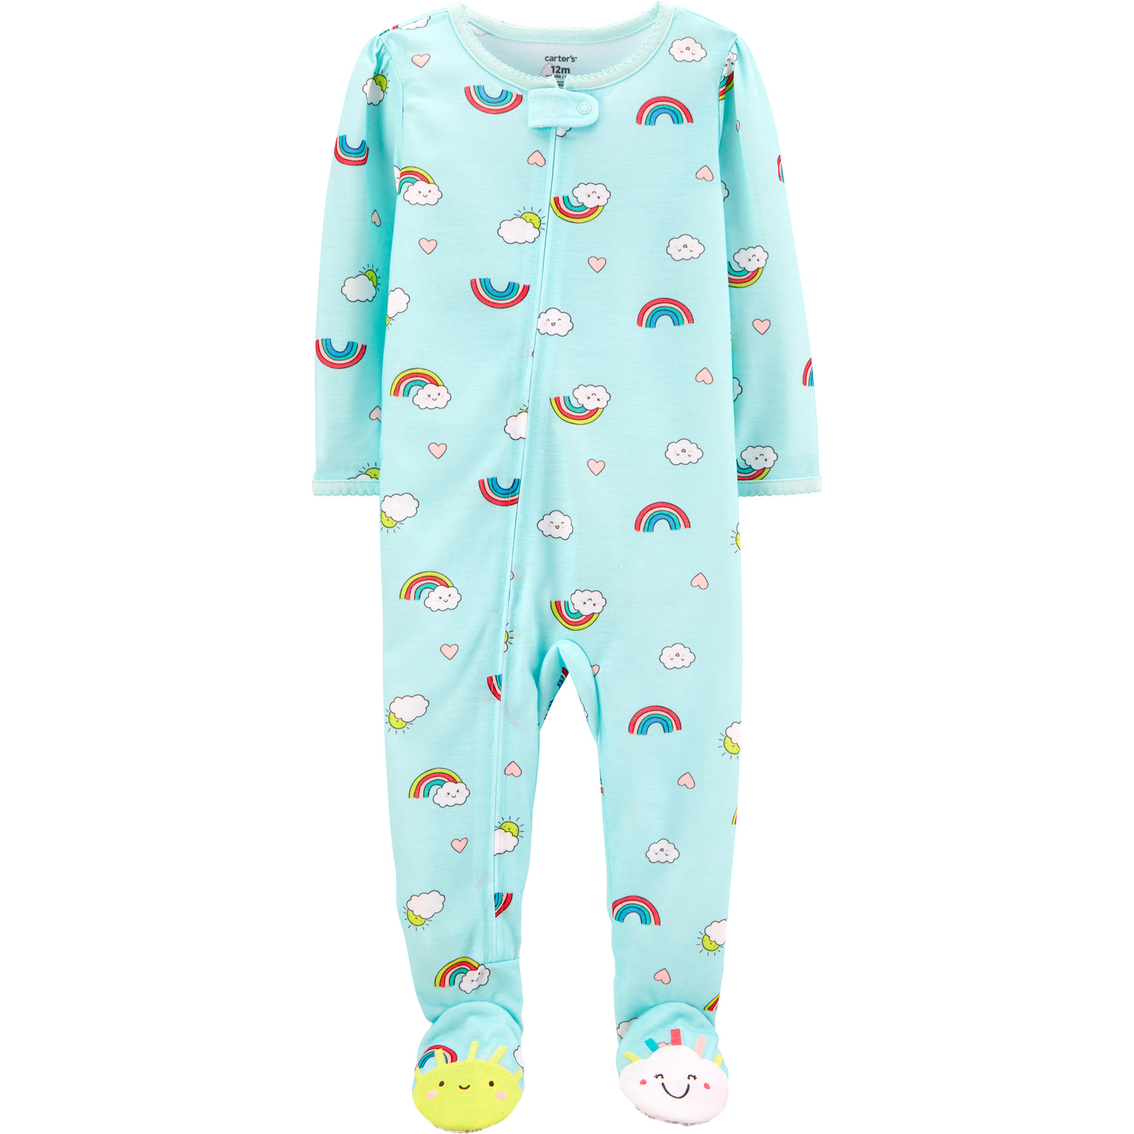 Carter's Infant Girls Rainbow Footie Pajamas | Baby Girl 0-24 Months ...